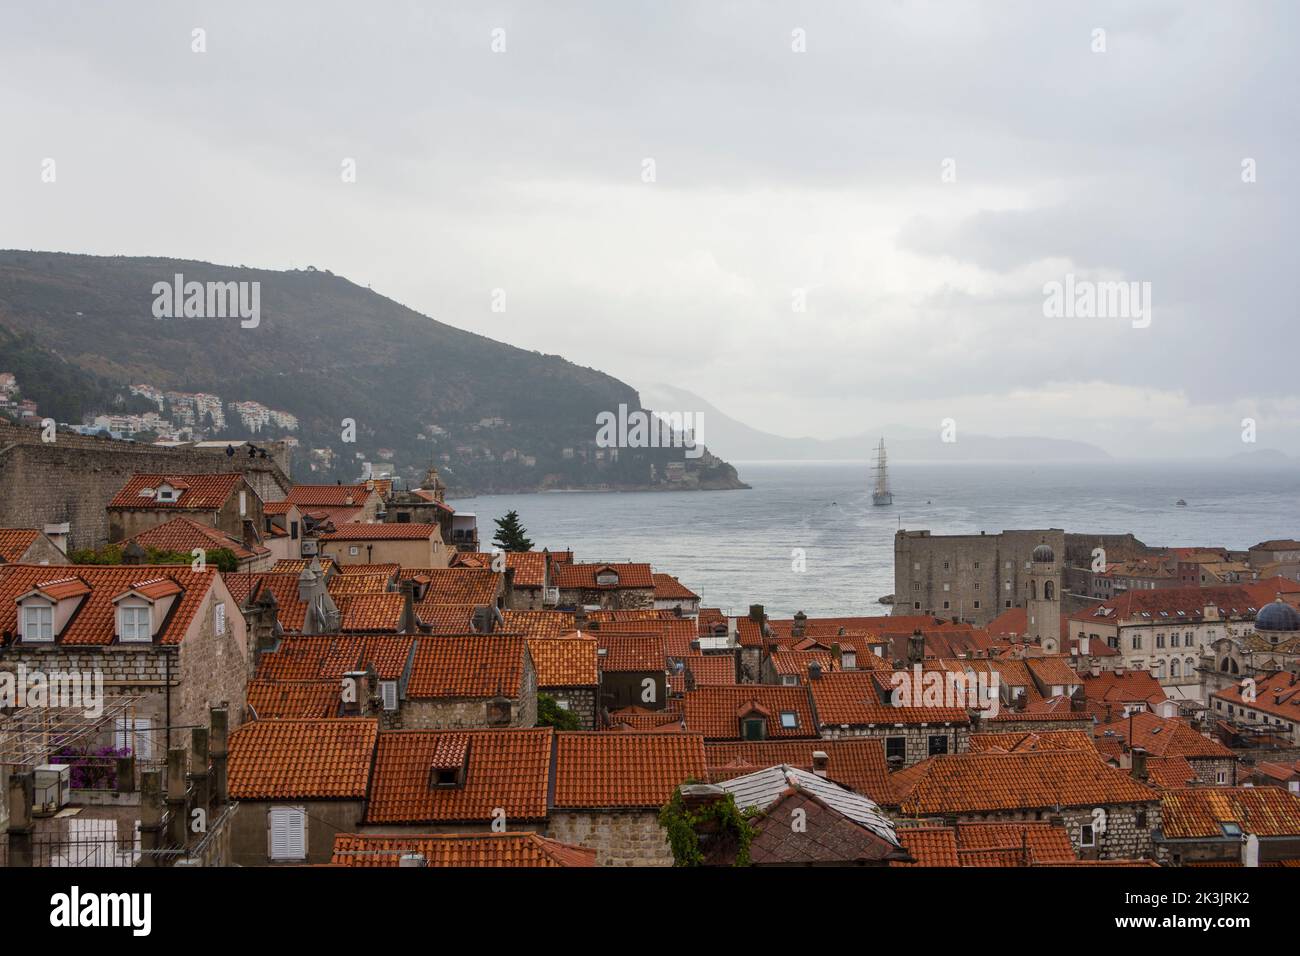 Überblick über die alte ummauerte Stadt Dubrovnik, Kroatien. Stockfoto